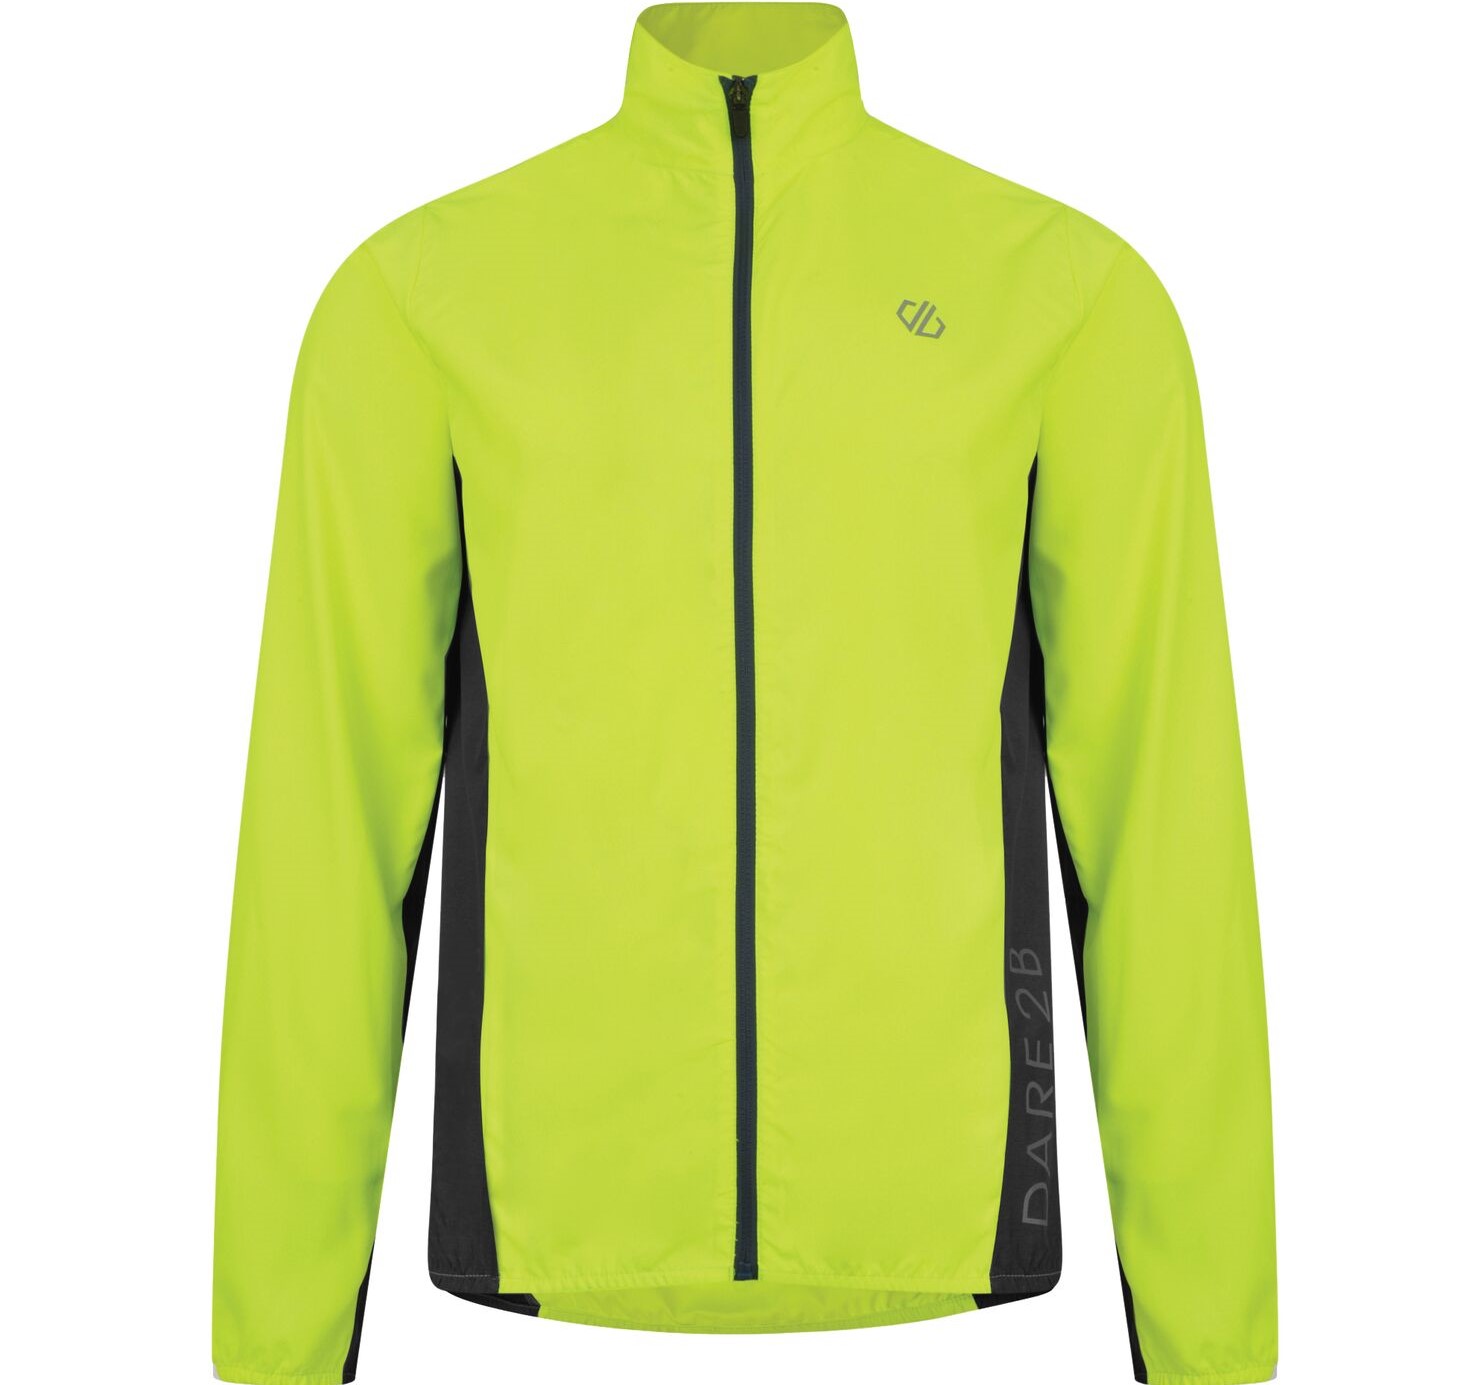 Reflective cycling jackets